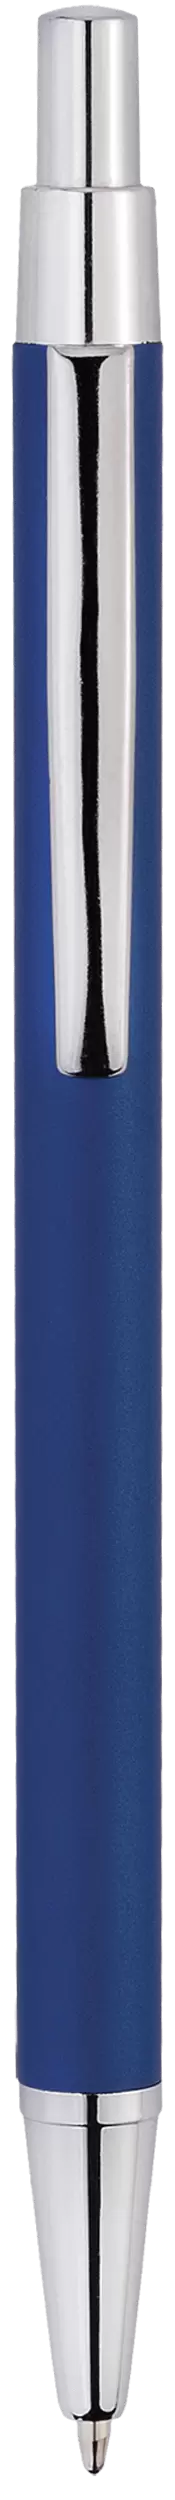 Ручка MOTIVE Синяя 1101-01